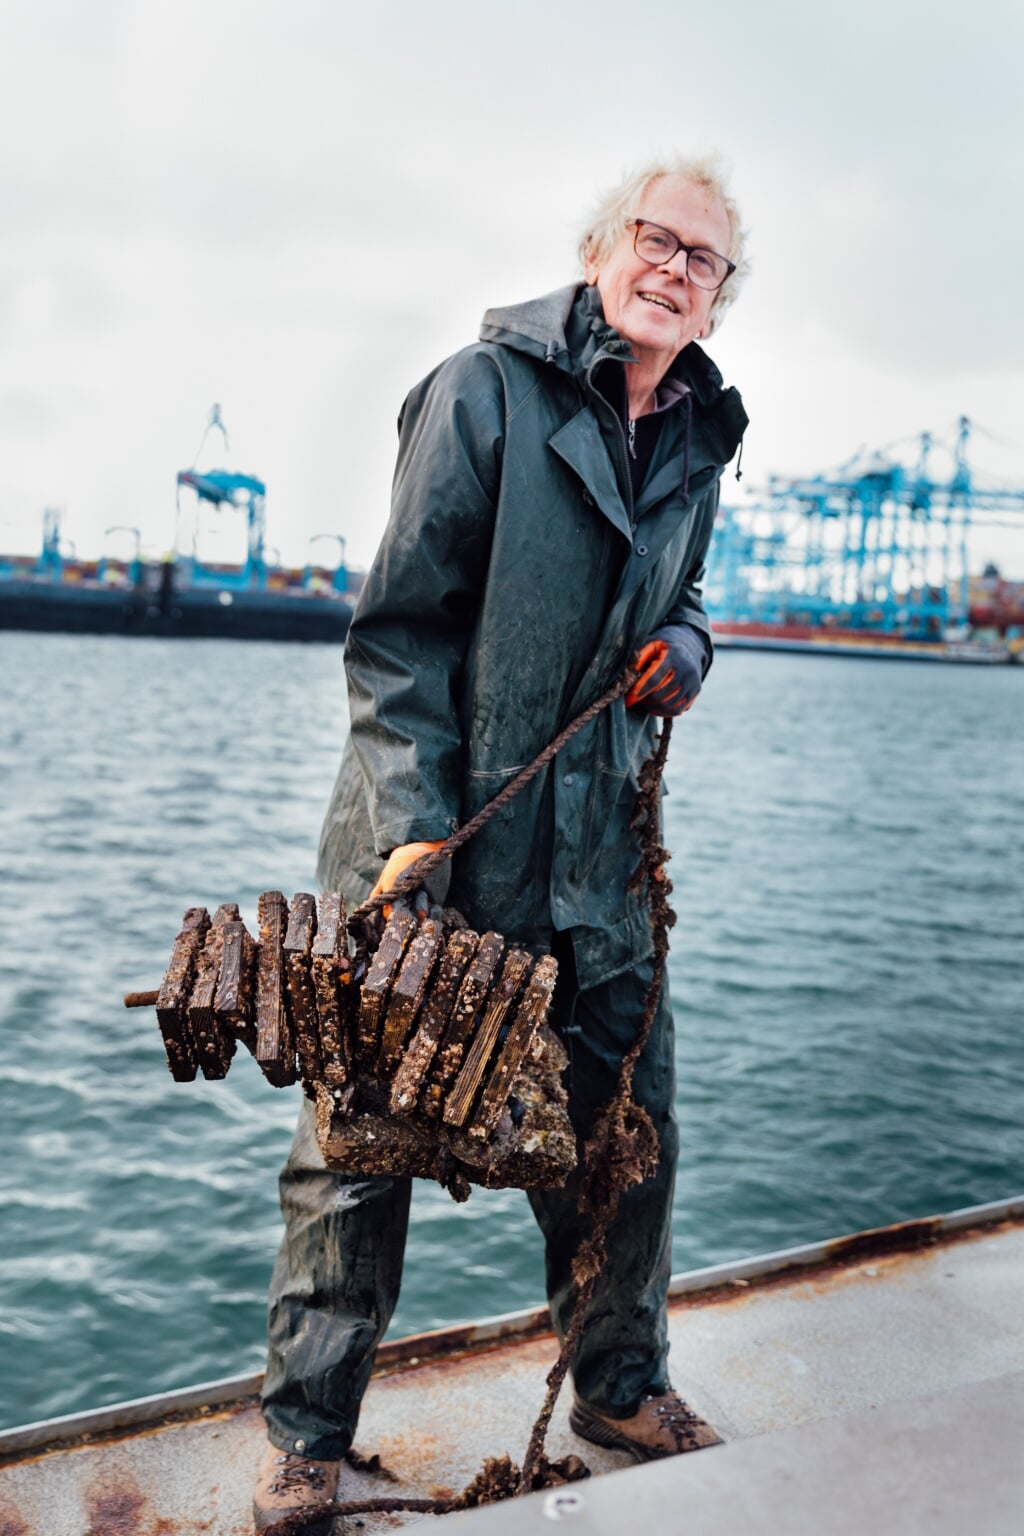 STARTS4Water residency of Mark IJzerman on Biodiversity in the Rotterdam Port.